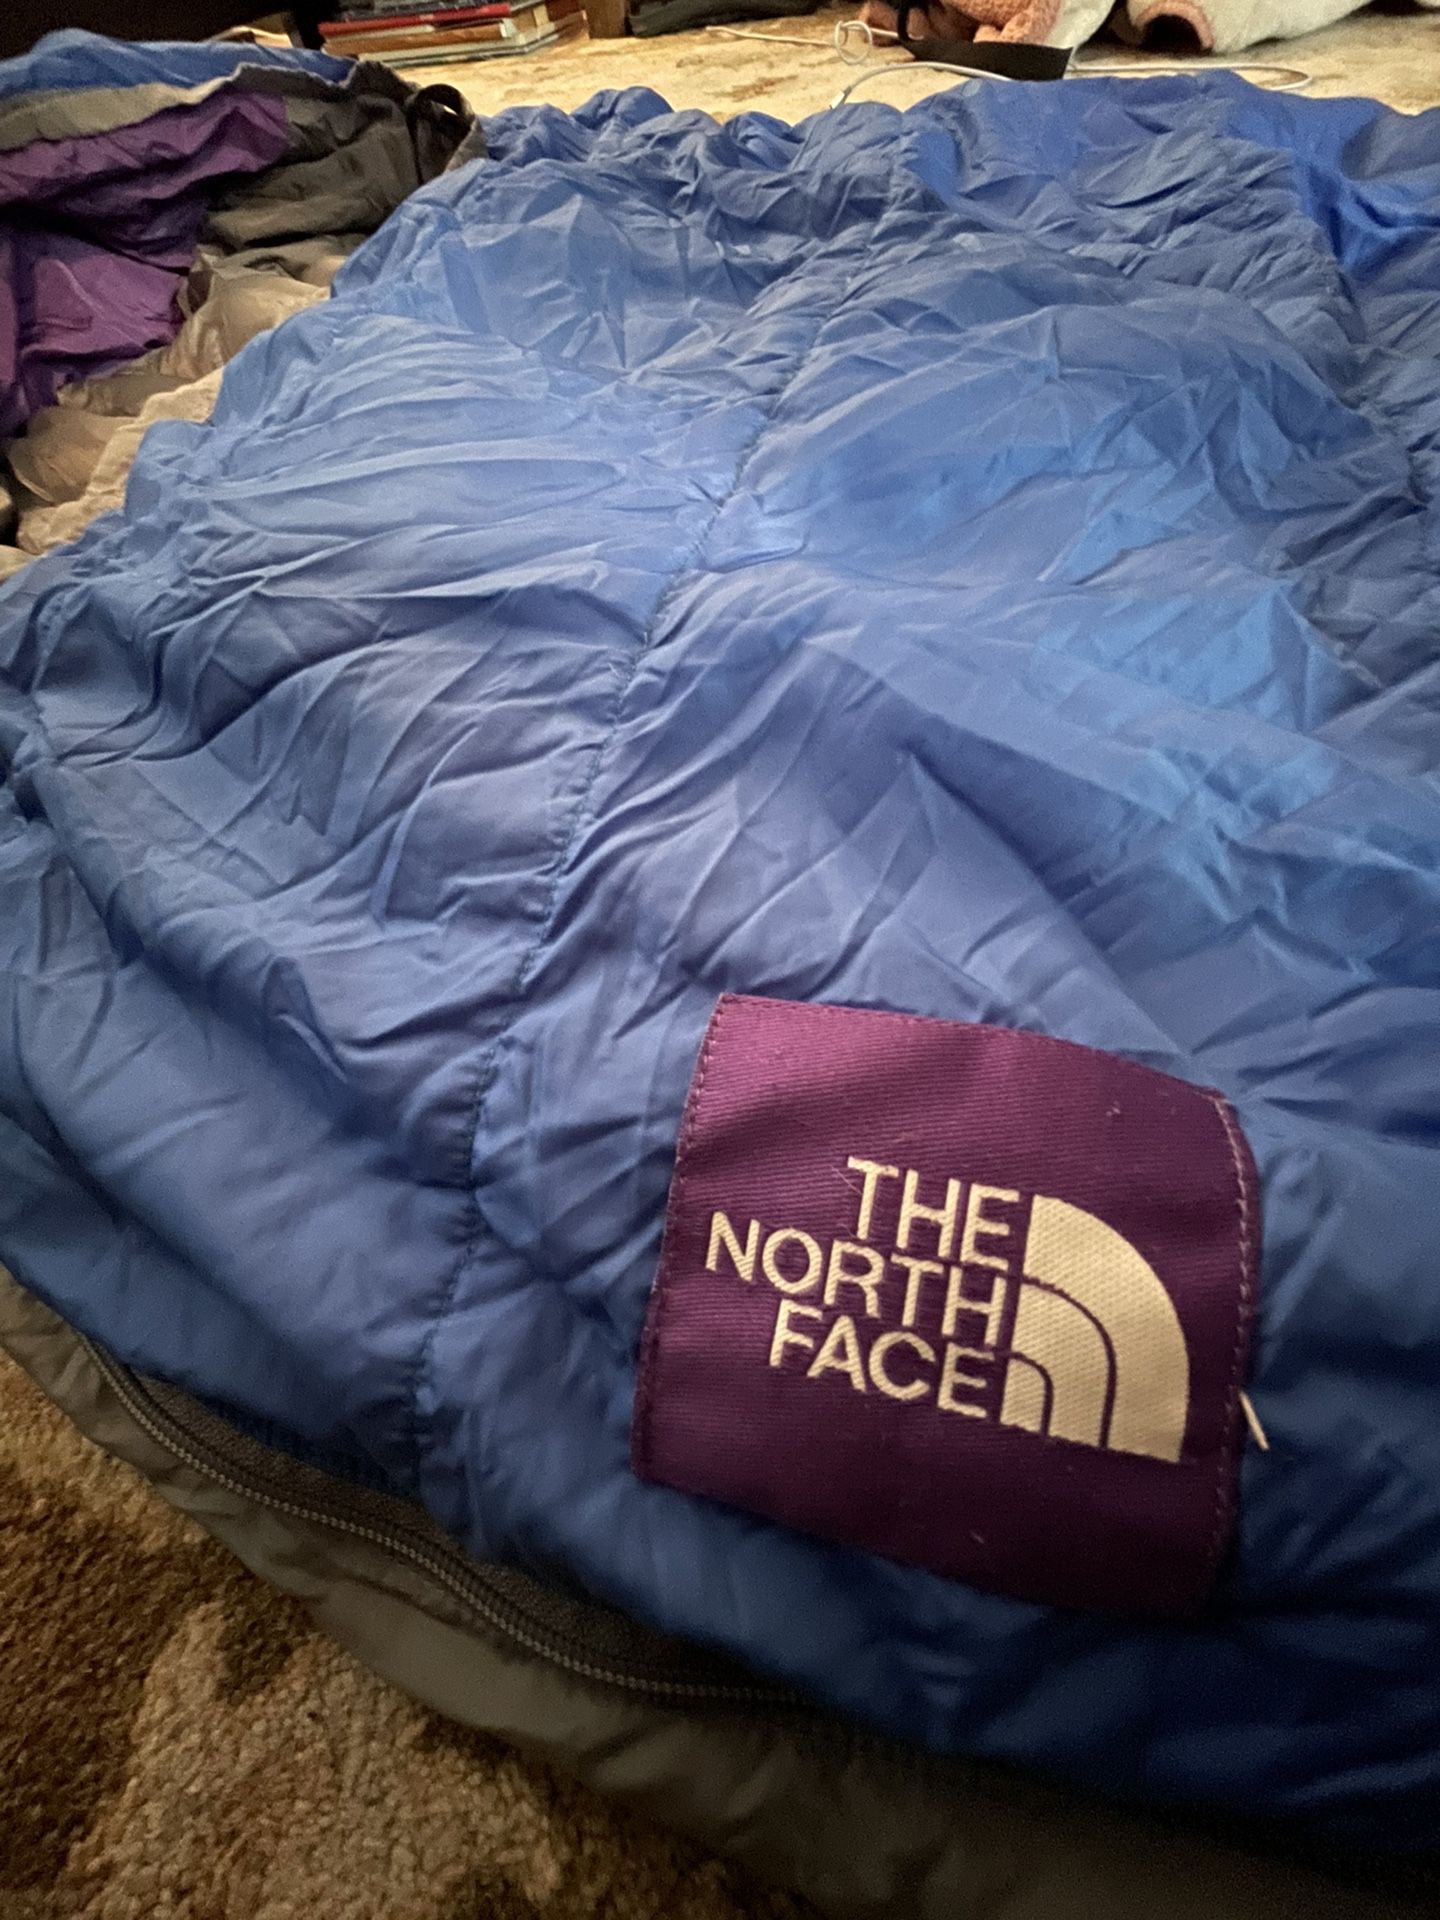 North Face Sleeping Bag 